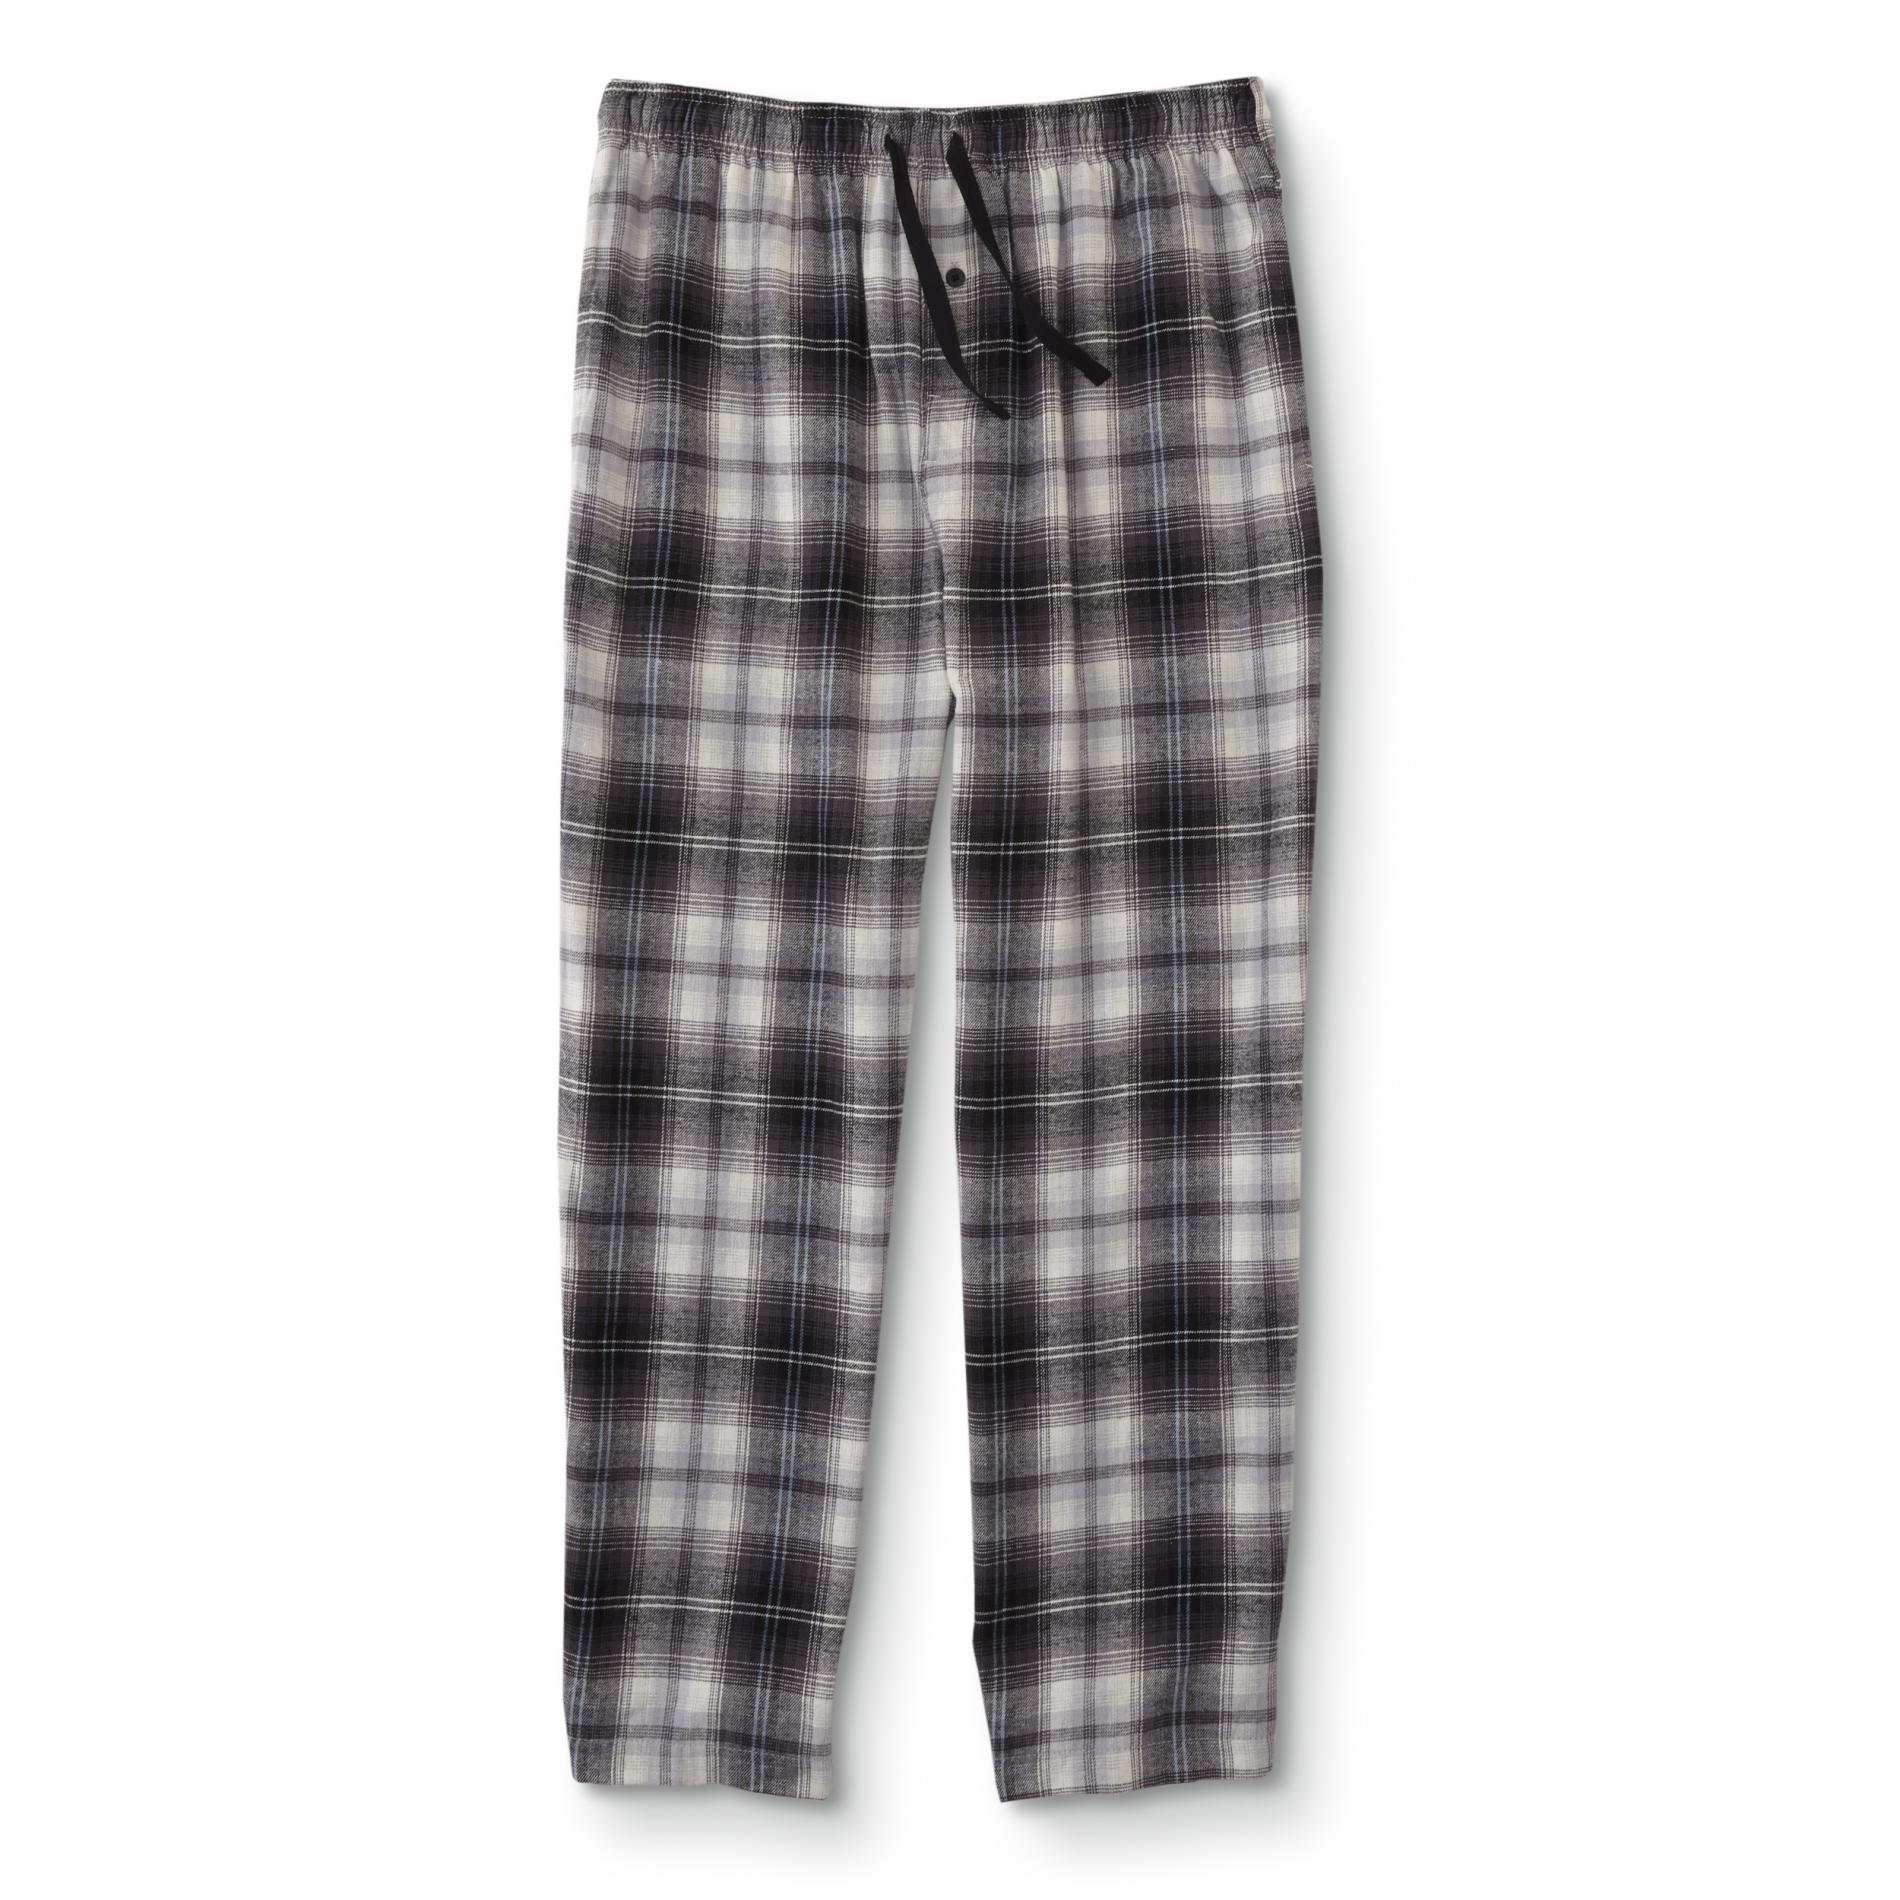 Northwest Territory Men's Flannel Pajama Pants - Plaid